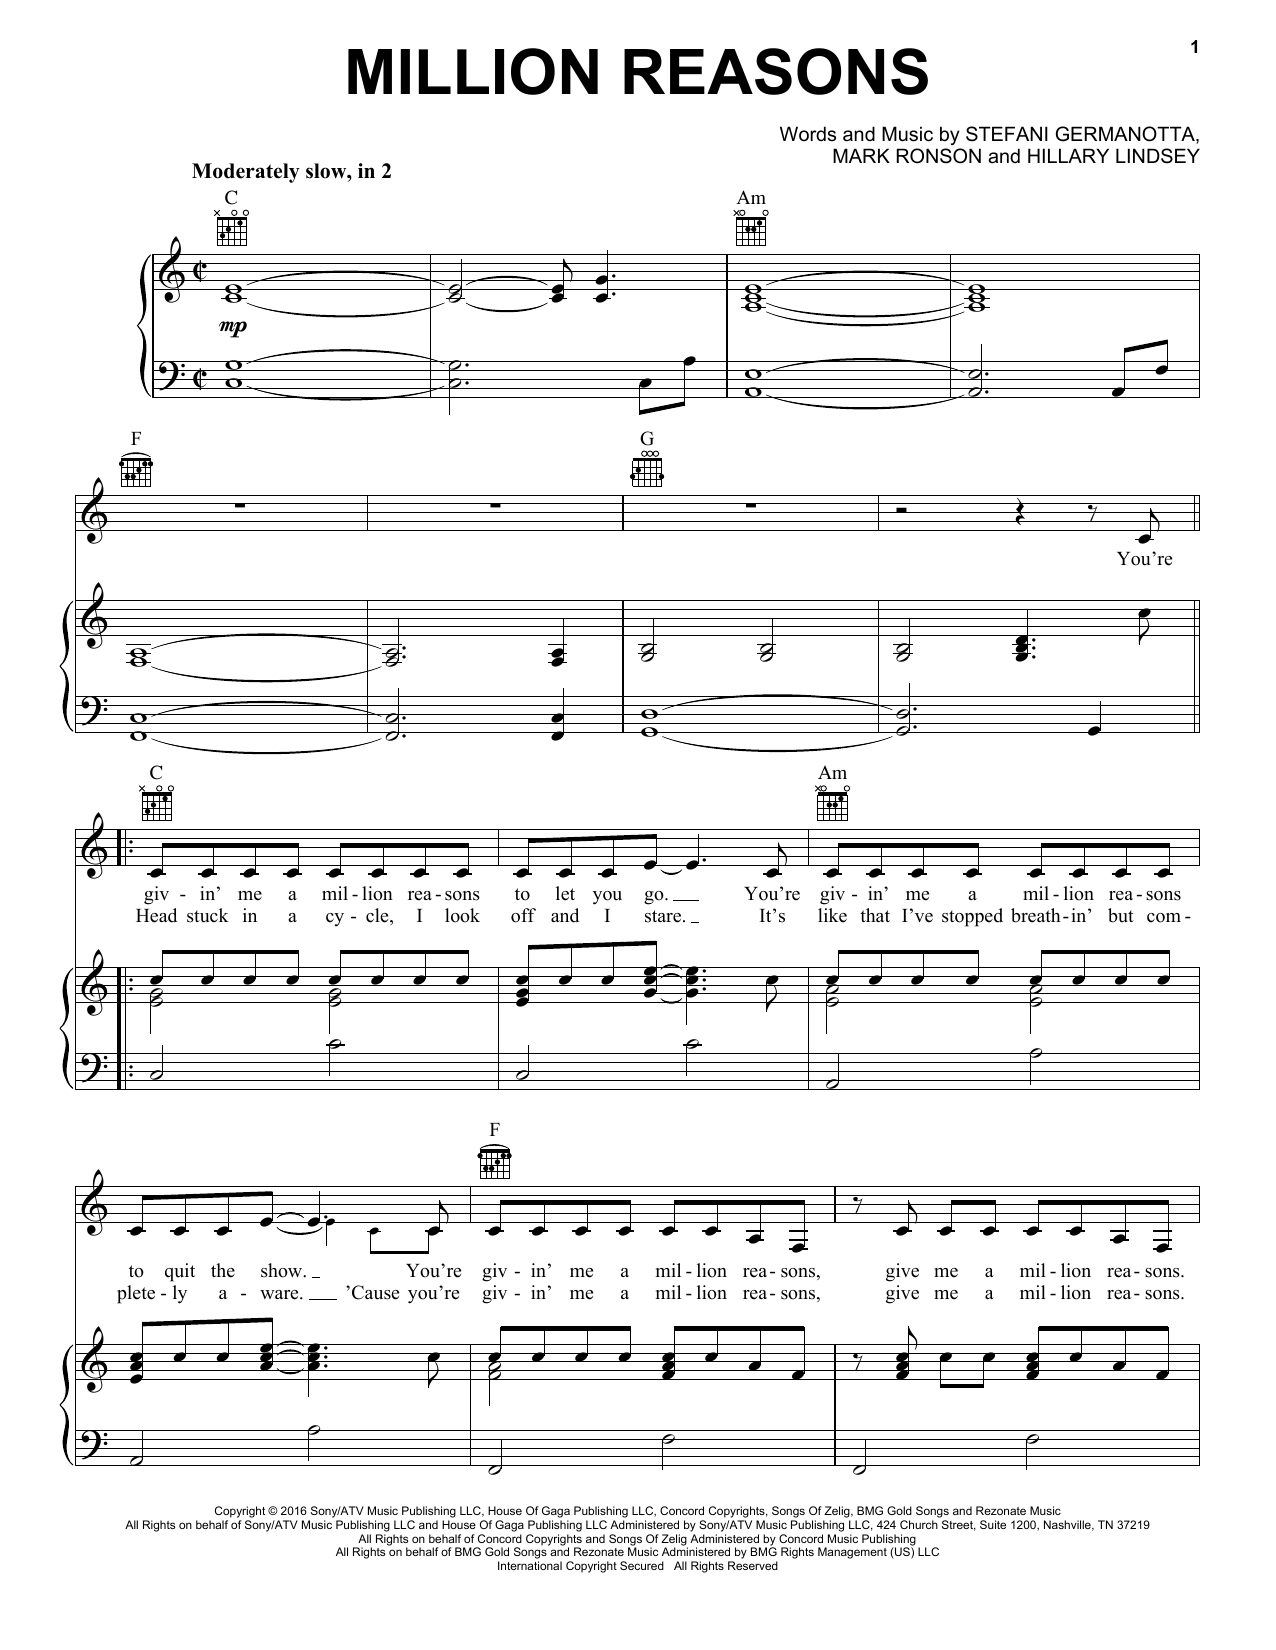 Lady Gaga Million Reasons Sheet Music Notes & Chords for Chord Buddy - Download or Print PDF